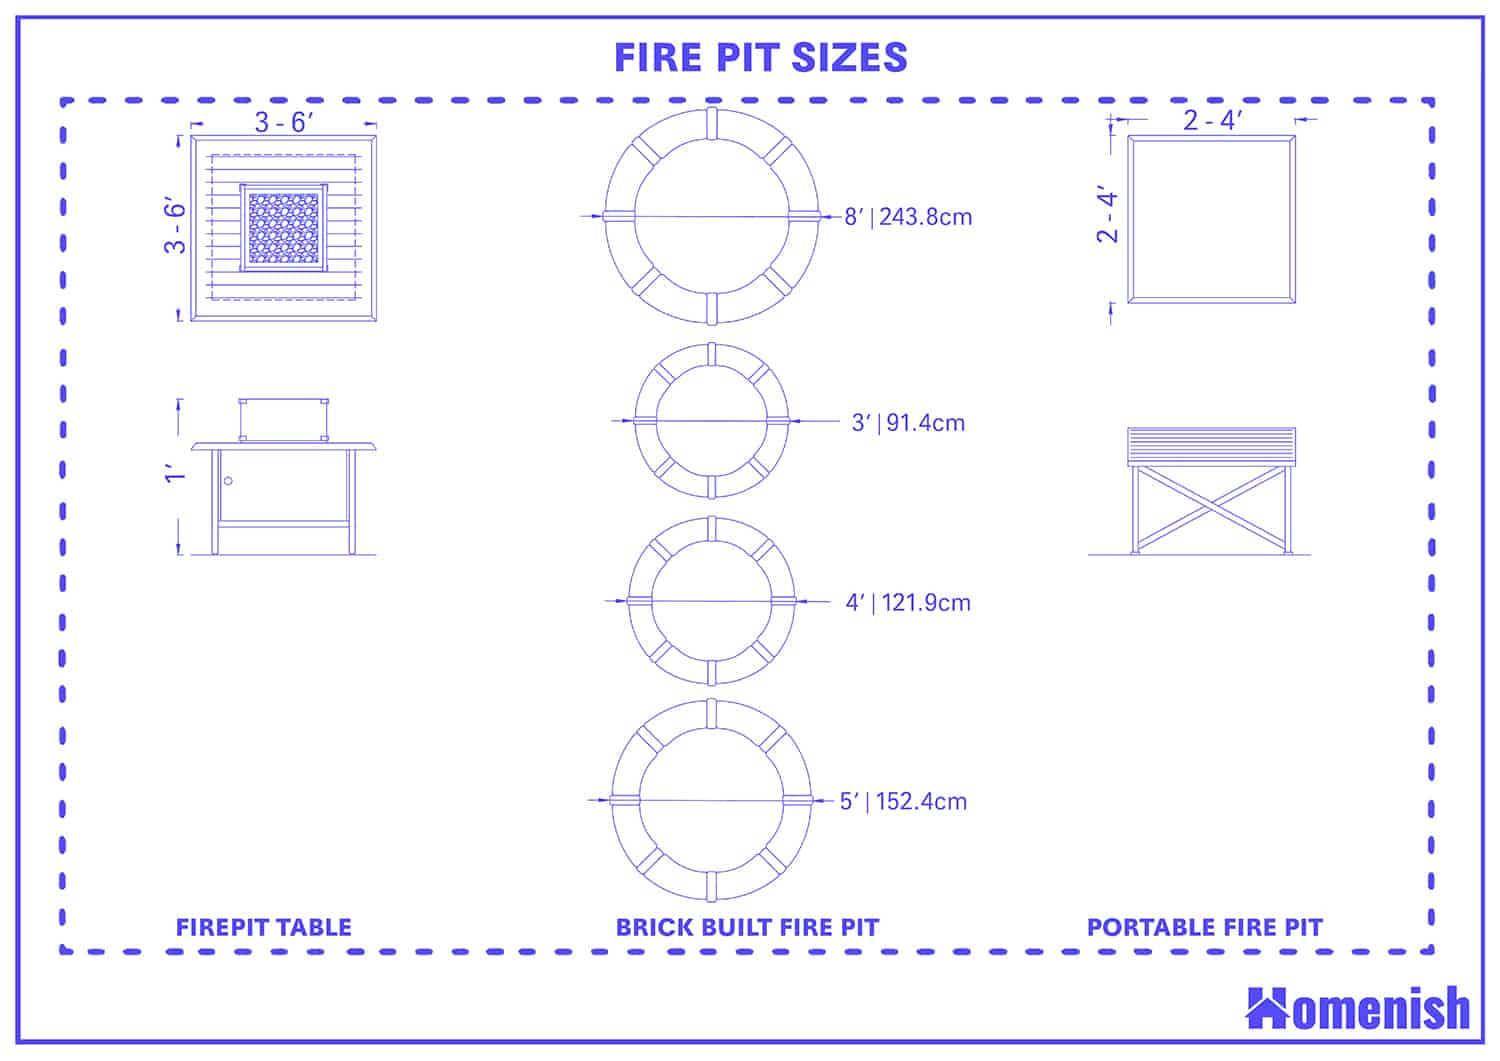 Fire pit sizes